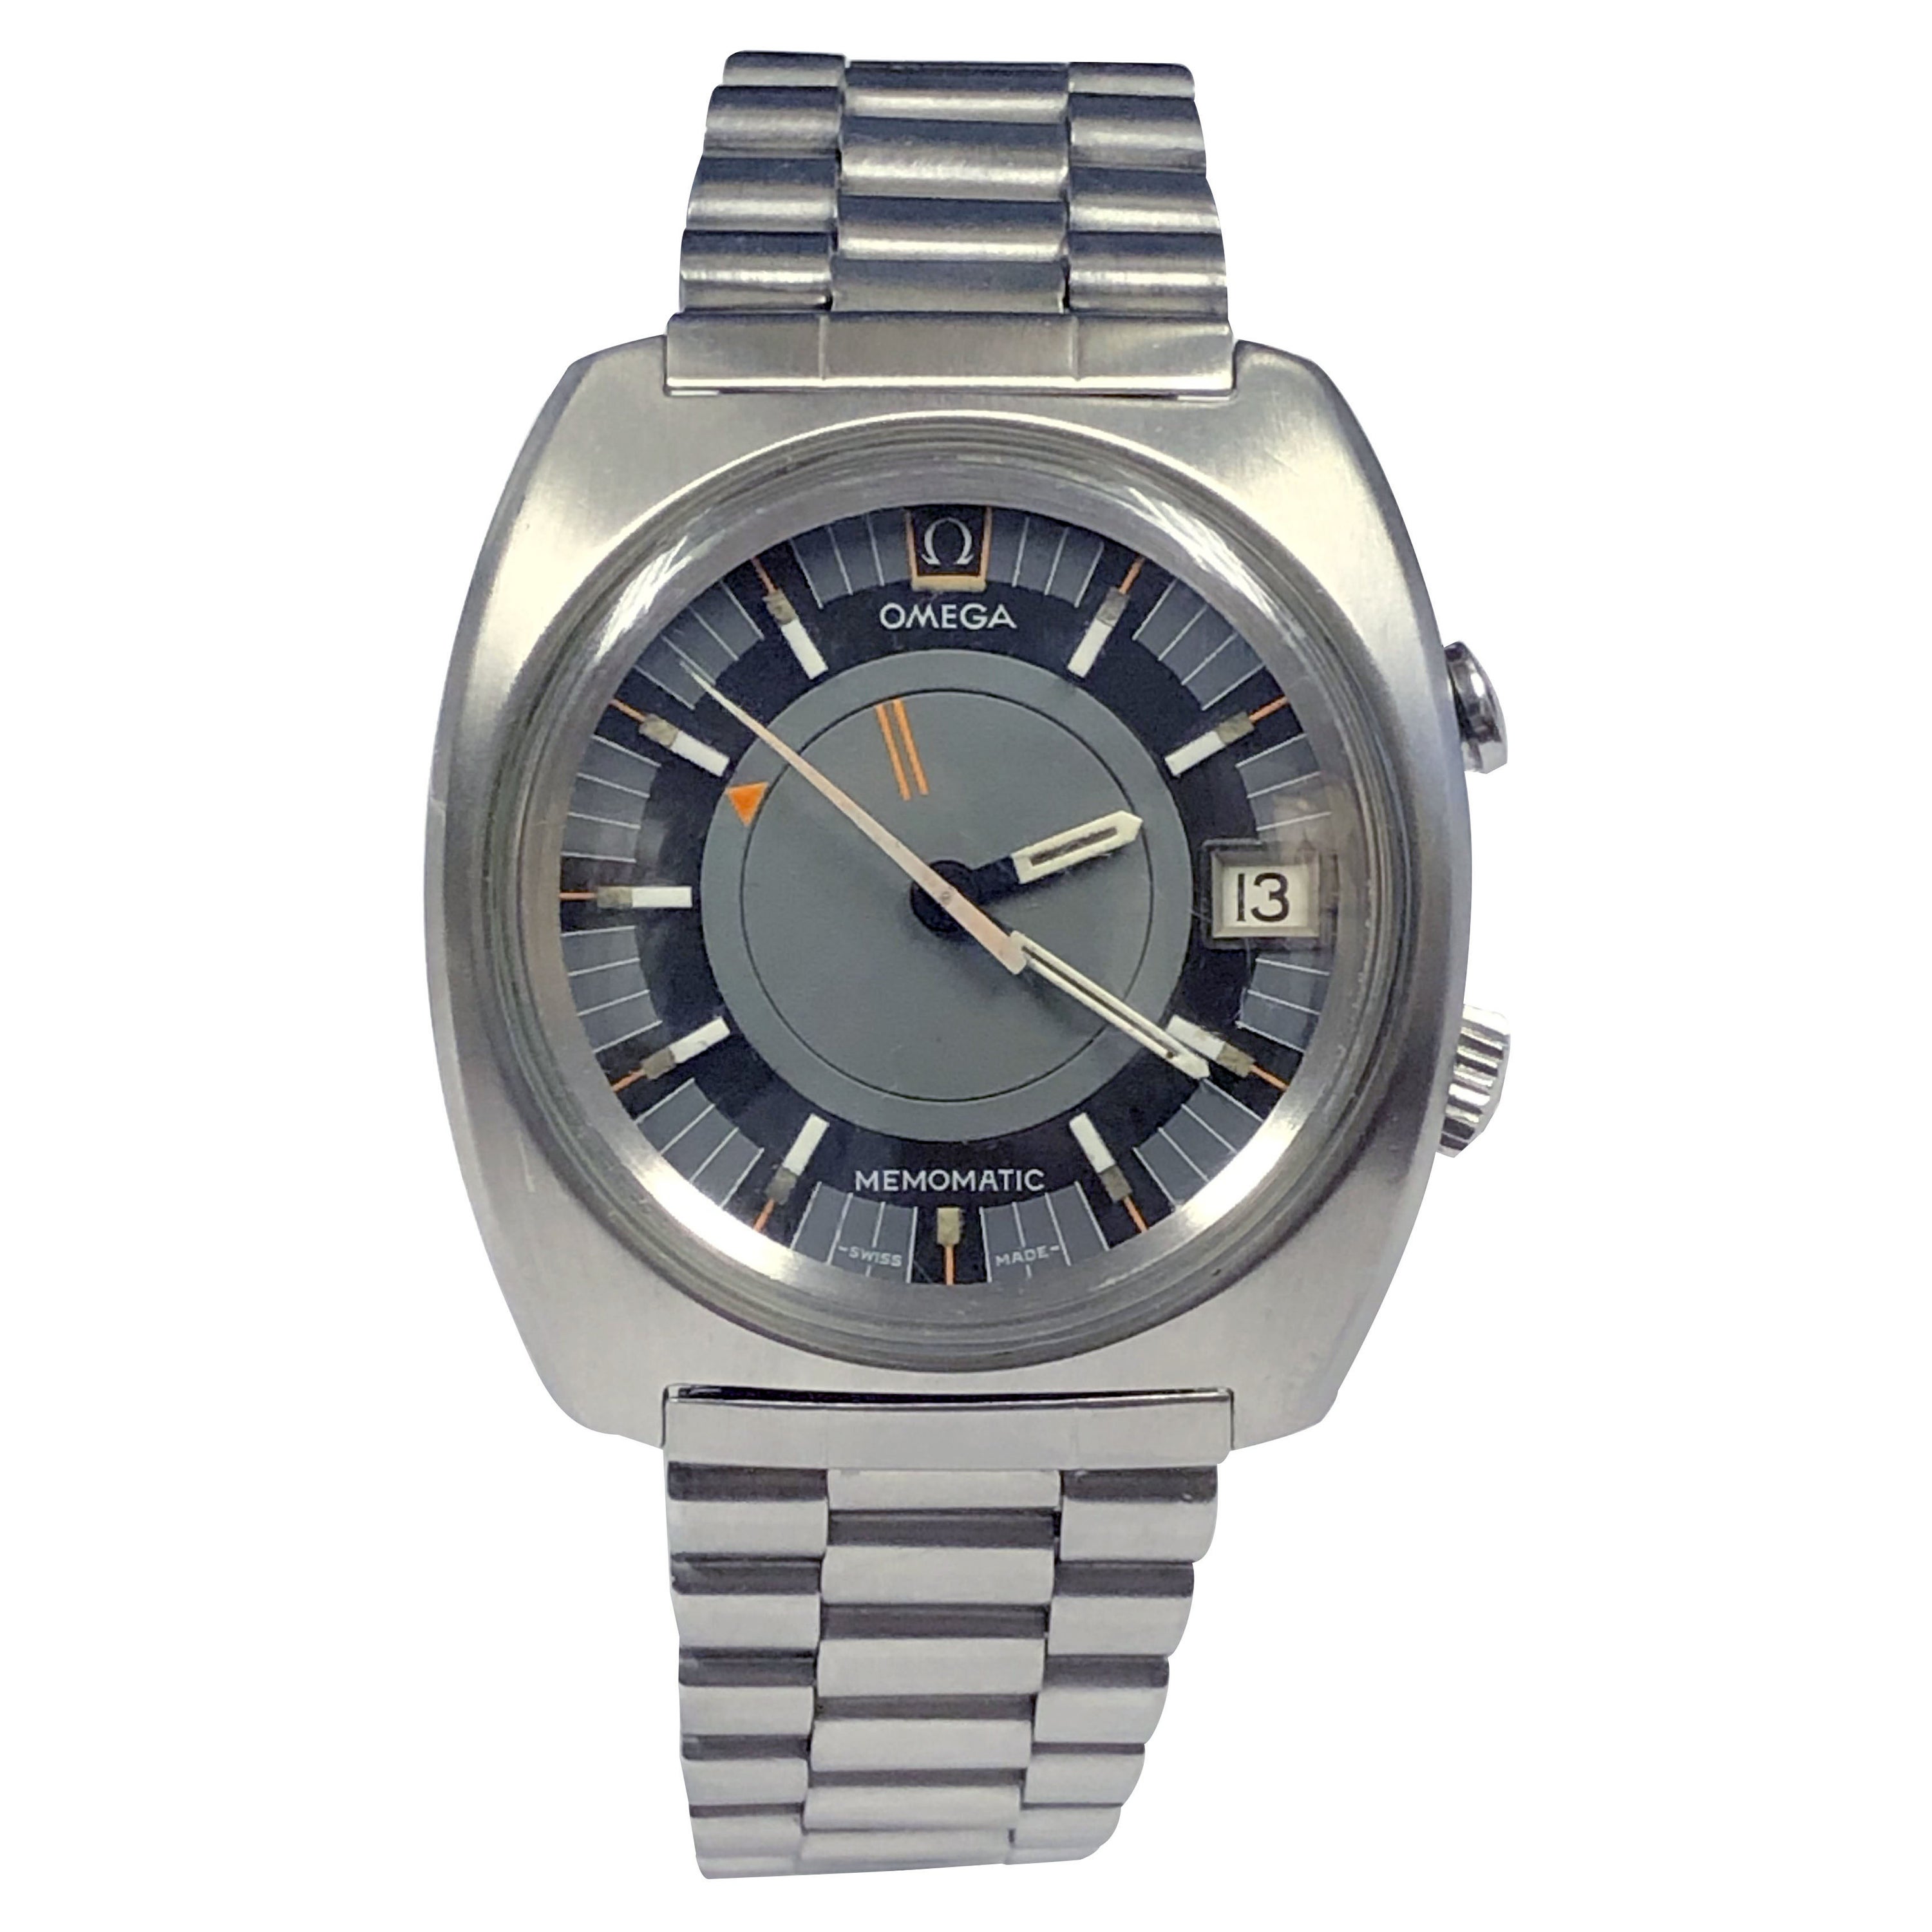 Vintage Omega Seamaster Memomatic Self Winding Alarm Wrist Watch